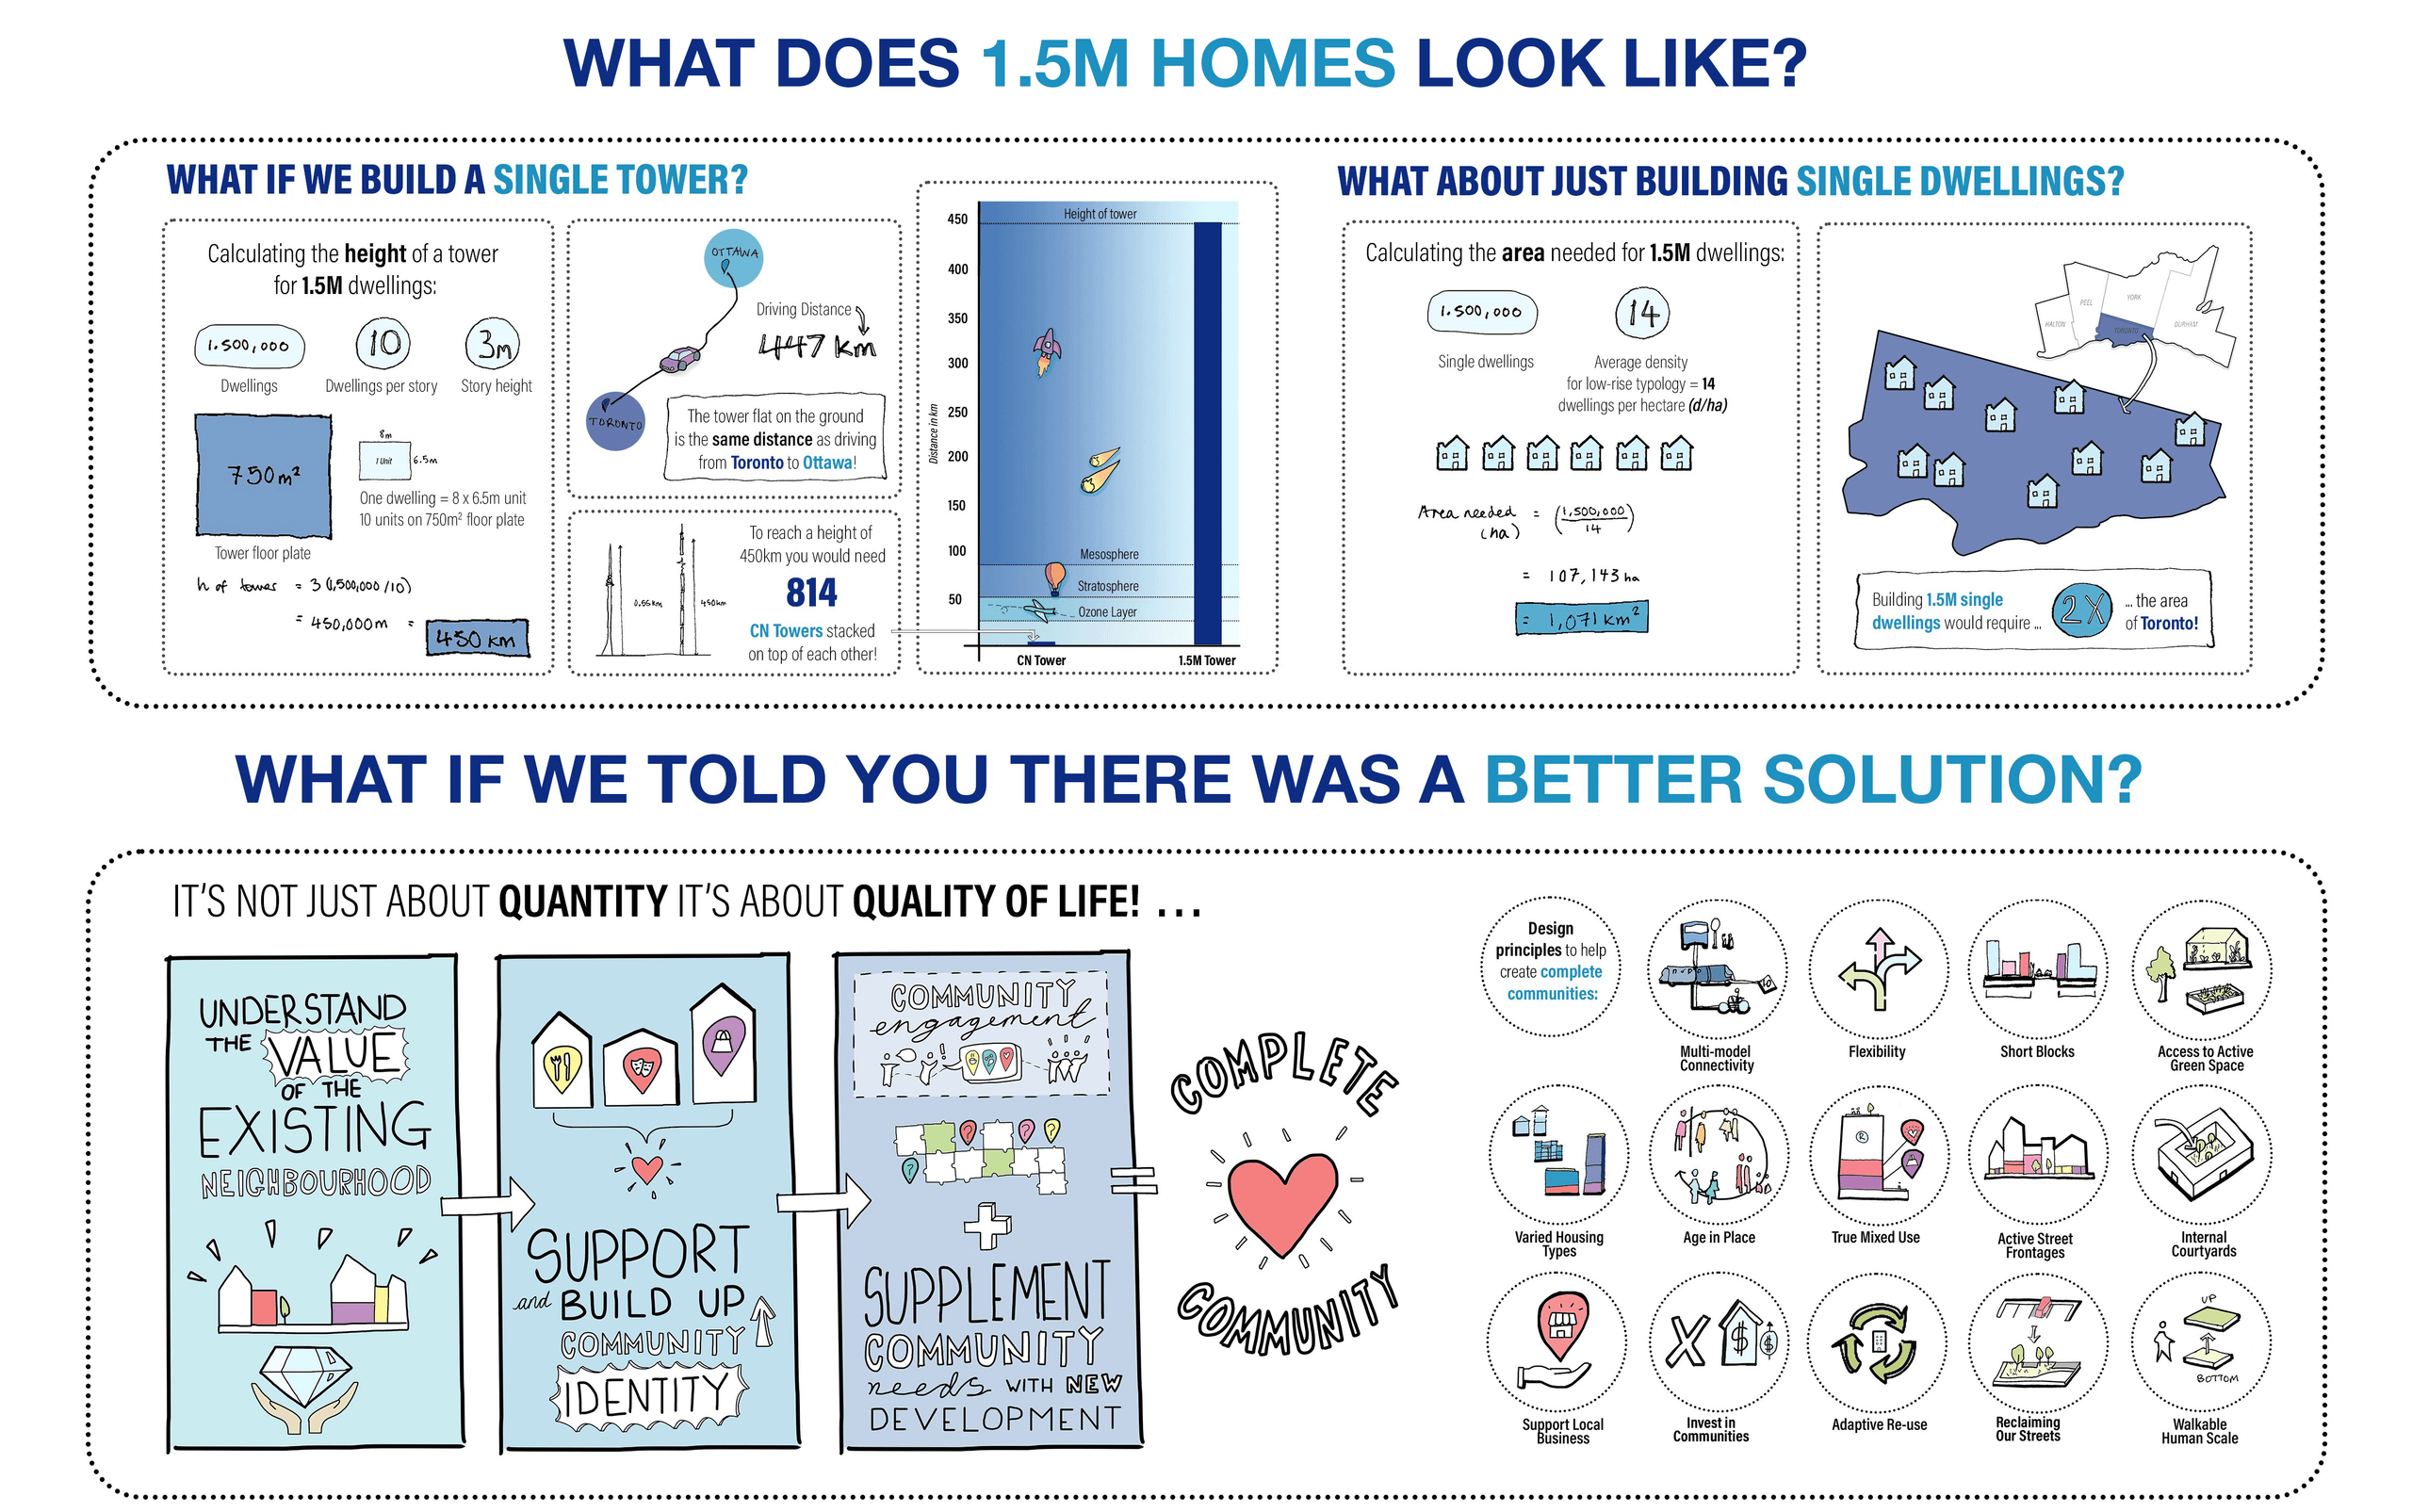 How do we build 1.5 million homes